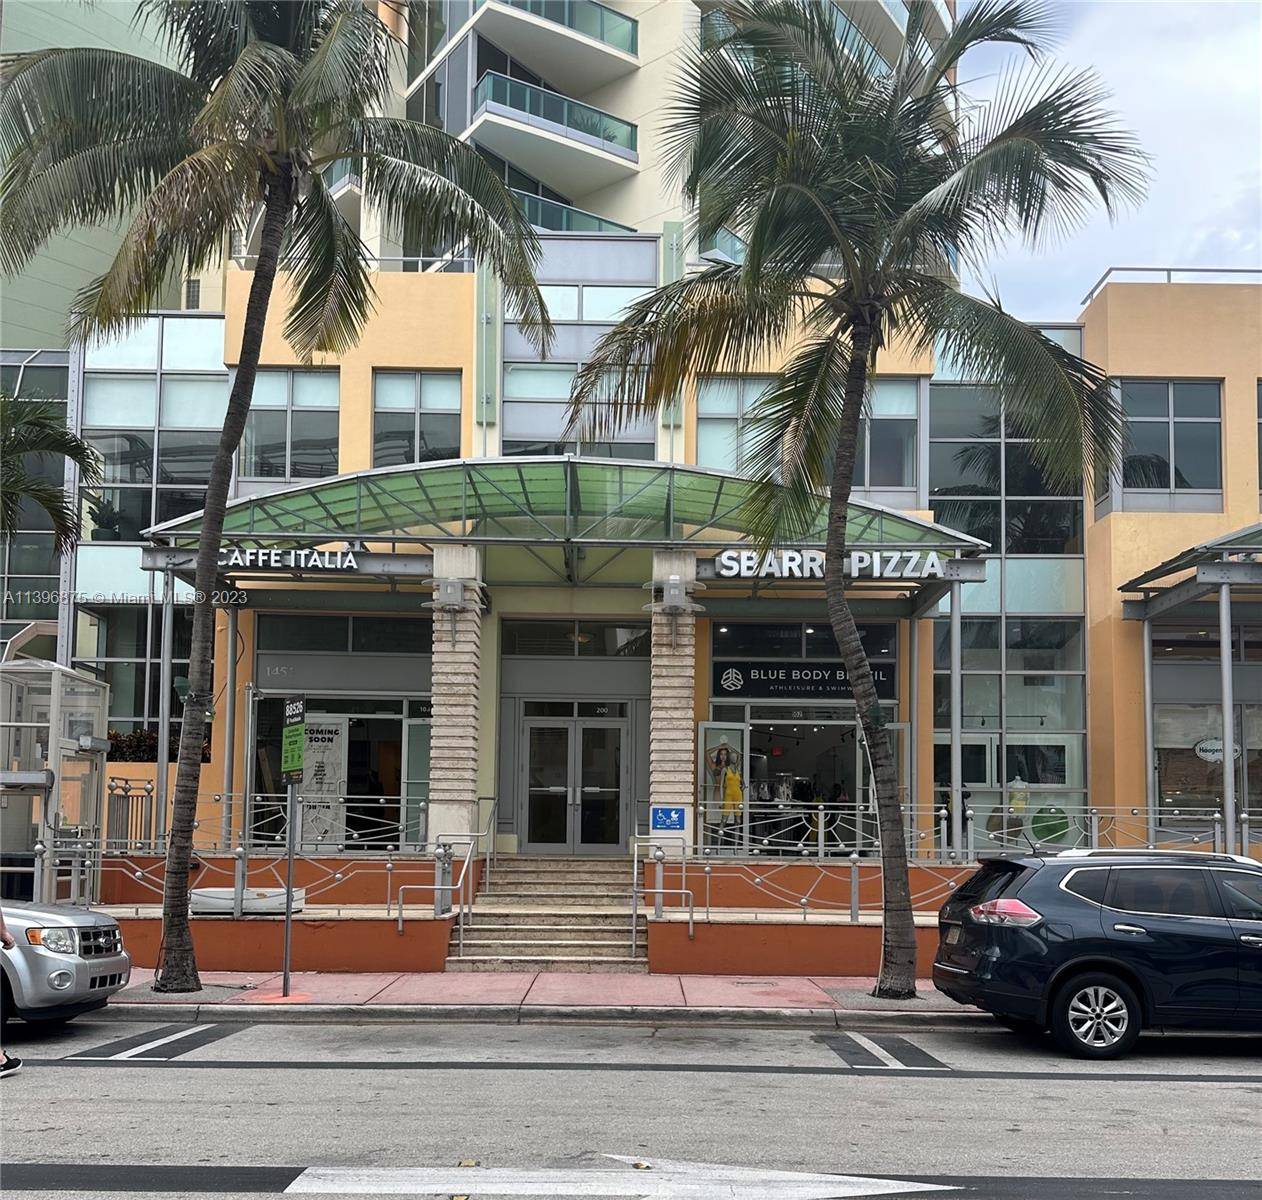 Two Prime ground floor retail condos at the prestigious Shoppes of Il Villaggio on Ocean Drive in South Beach.